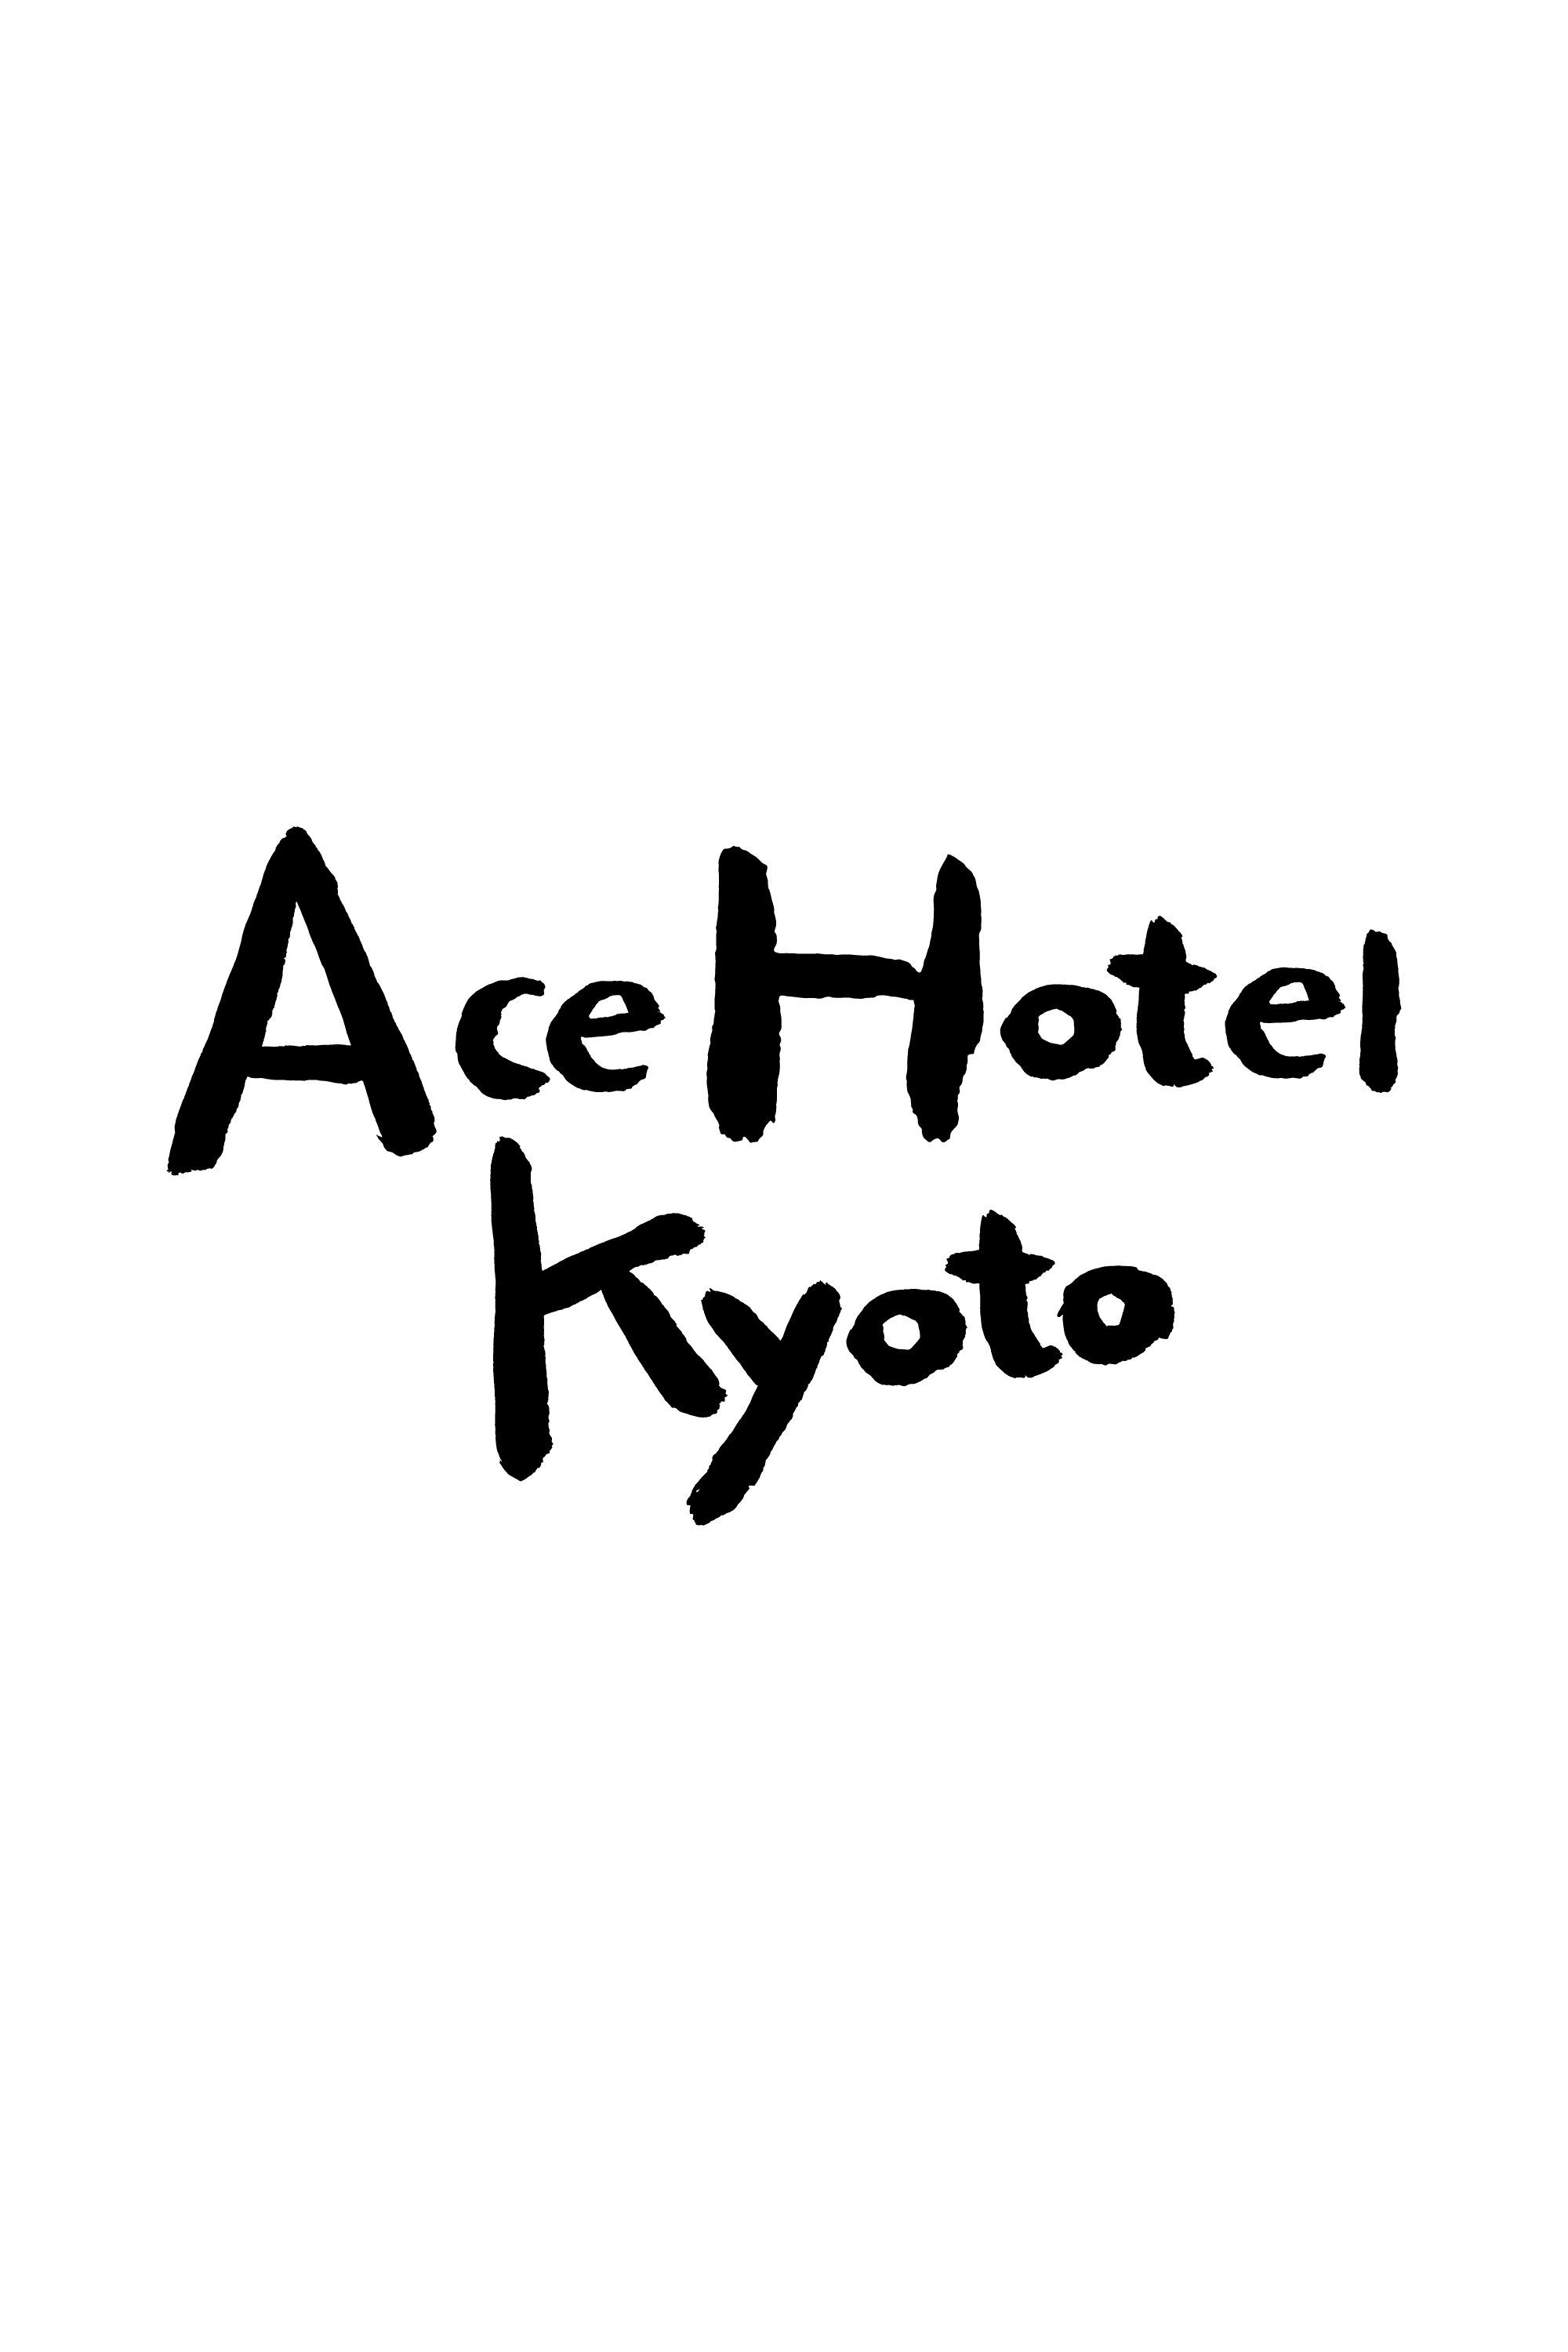 Diesel - Ace Hotel Kyoto, ジェネリック - Image 1